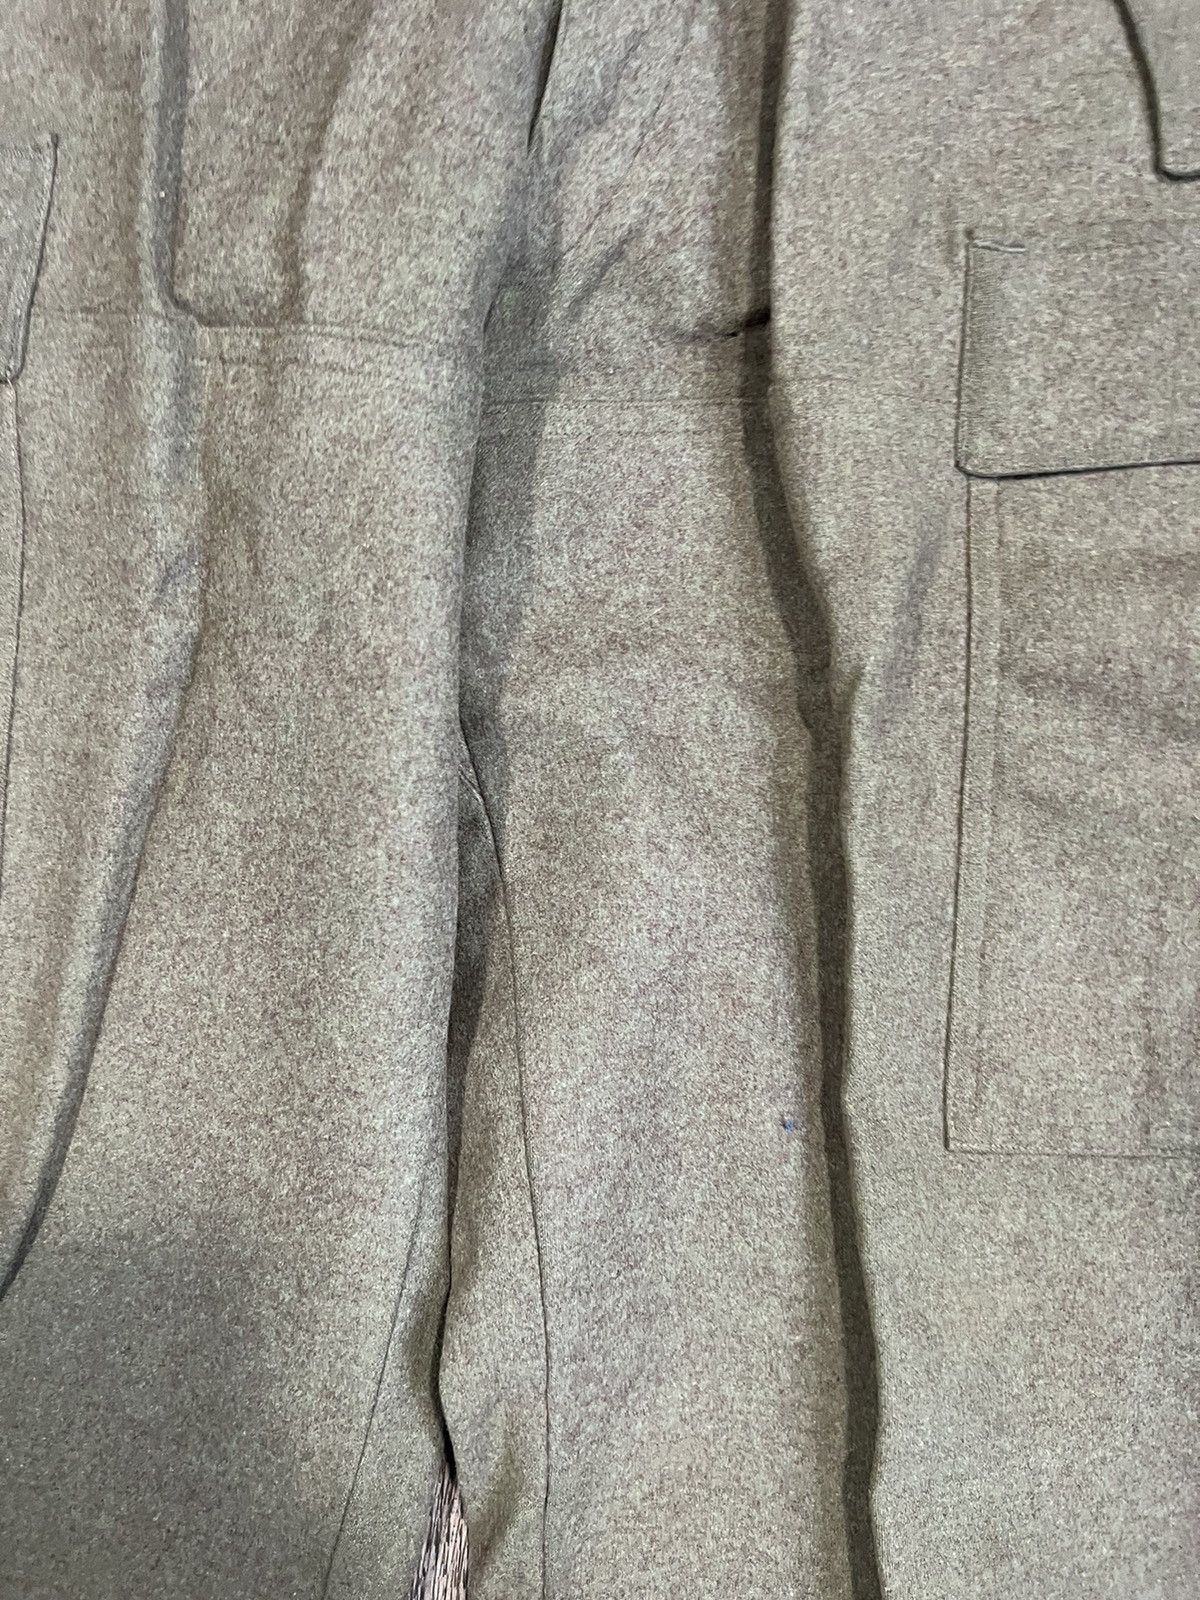 Vintage Vintage Army Wool Pants Size US 30 / EU 46 - 4 Thumbnail